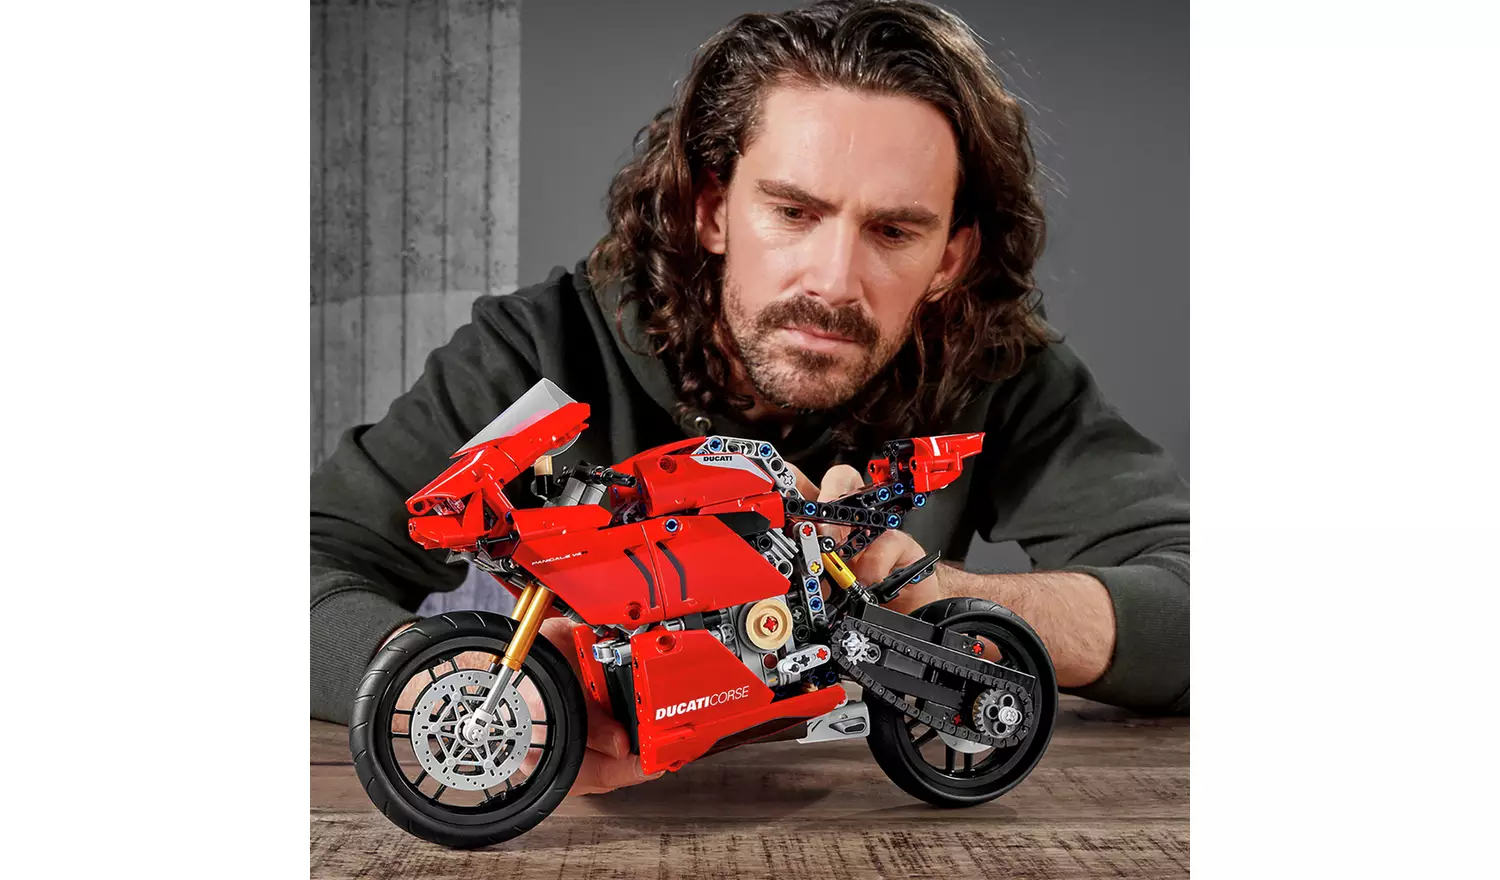 LEGO Technic Ducati Panigale V4 R Motorbike Model Set 42107